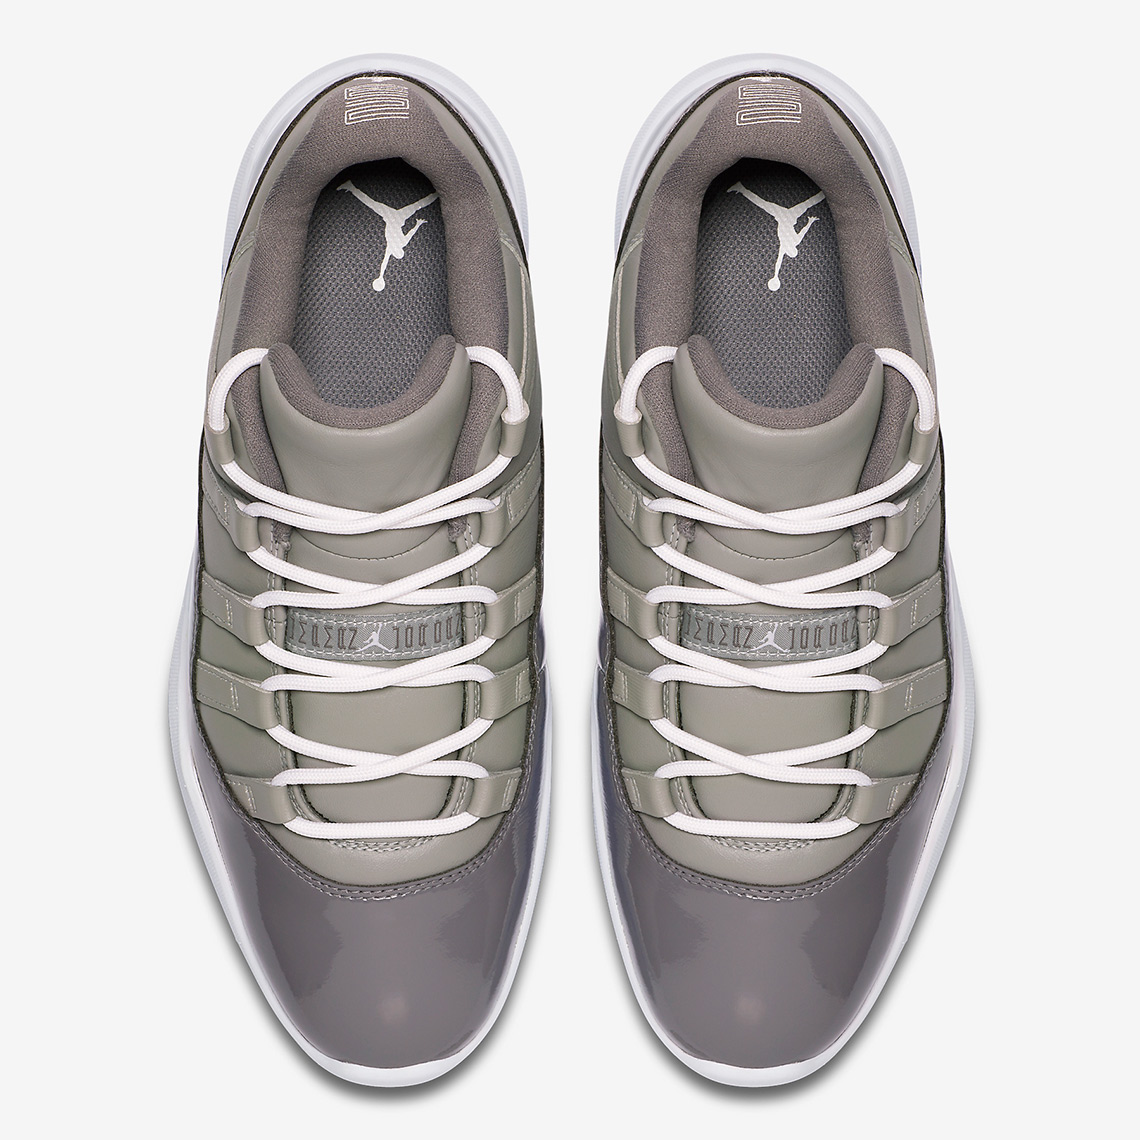 Jordan 11 Low Cool Grey Golf Shoes Aq0963 002 2